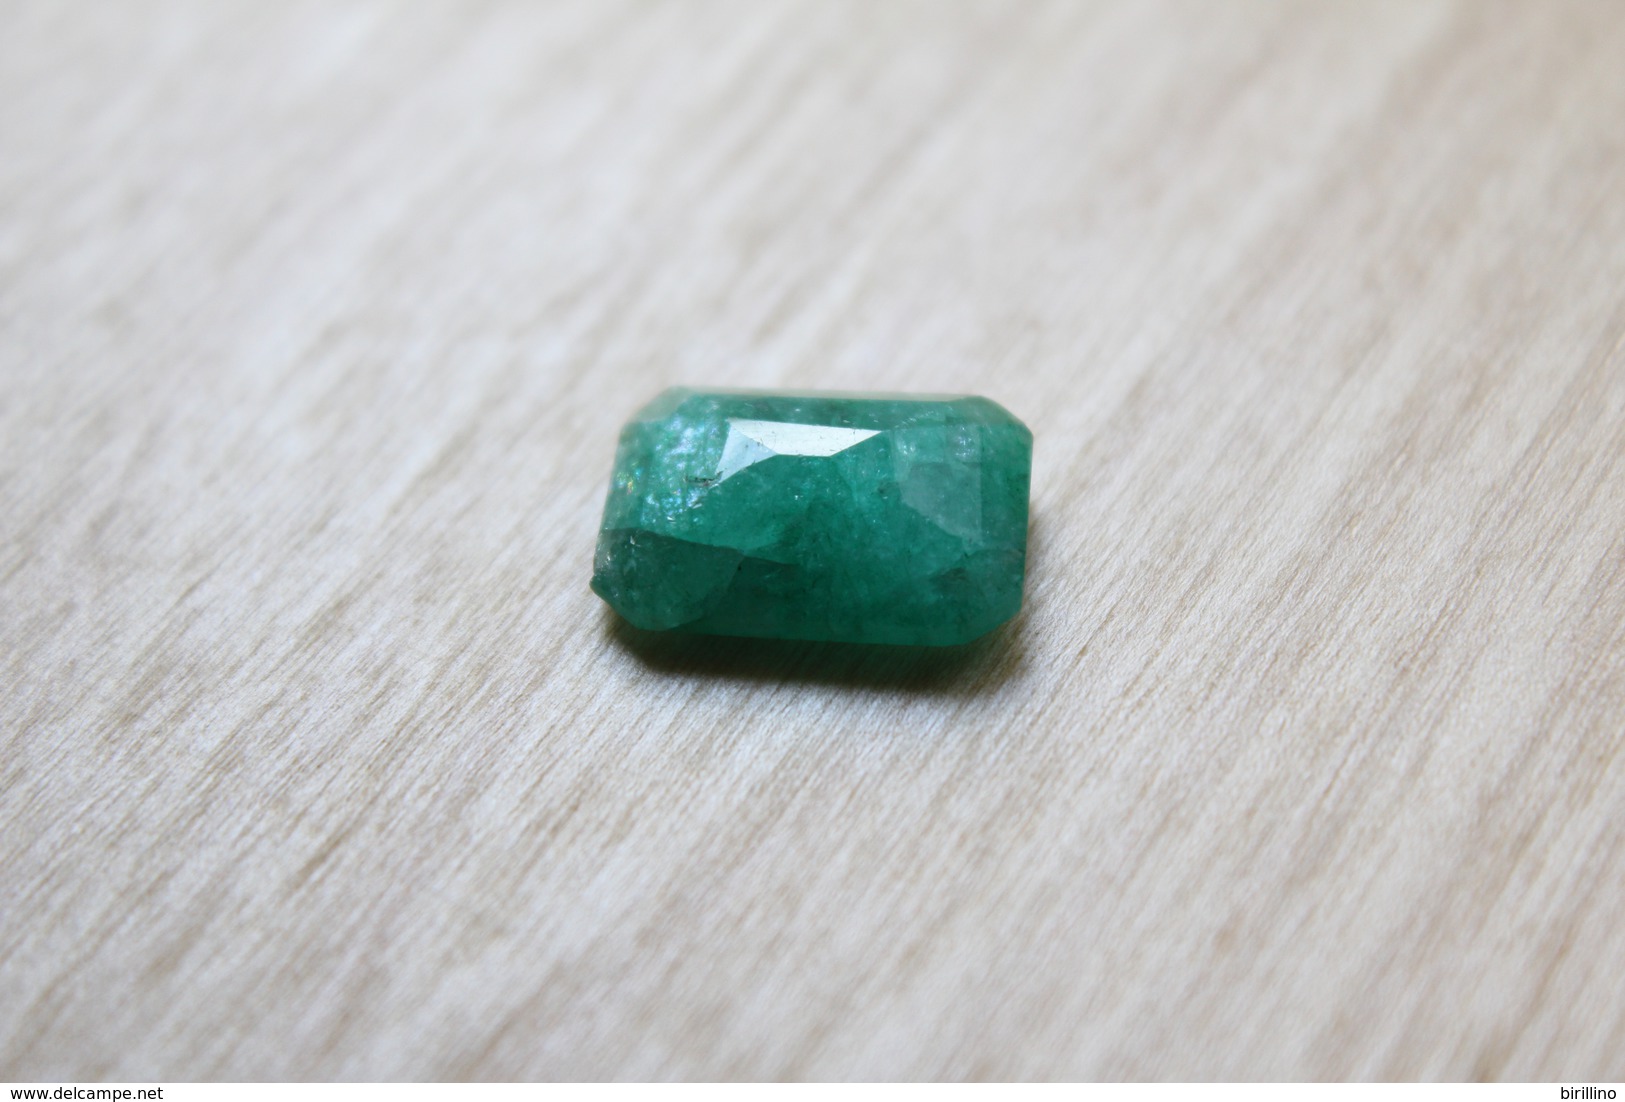 64 - Smeraldo - Ct. 7.95 - Emerald